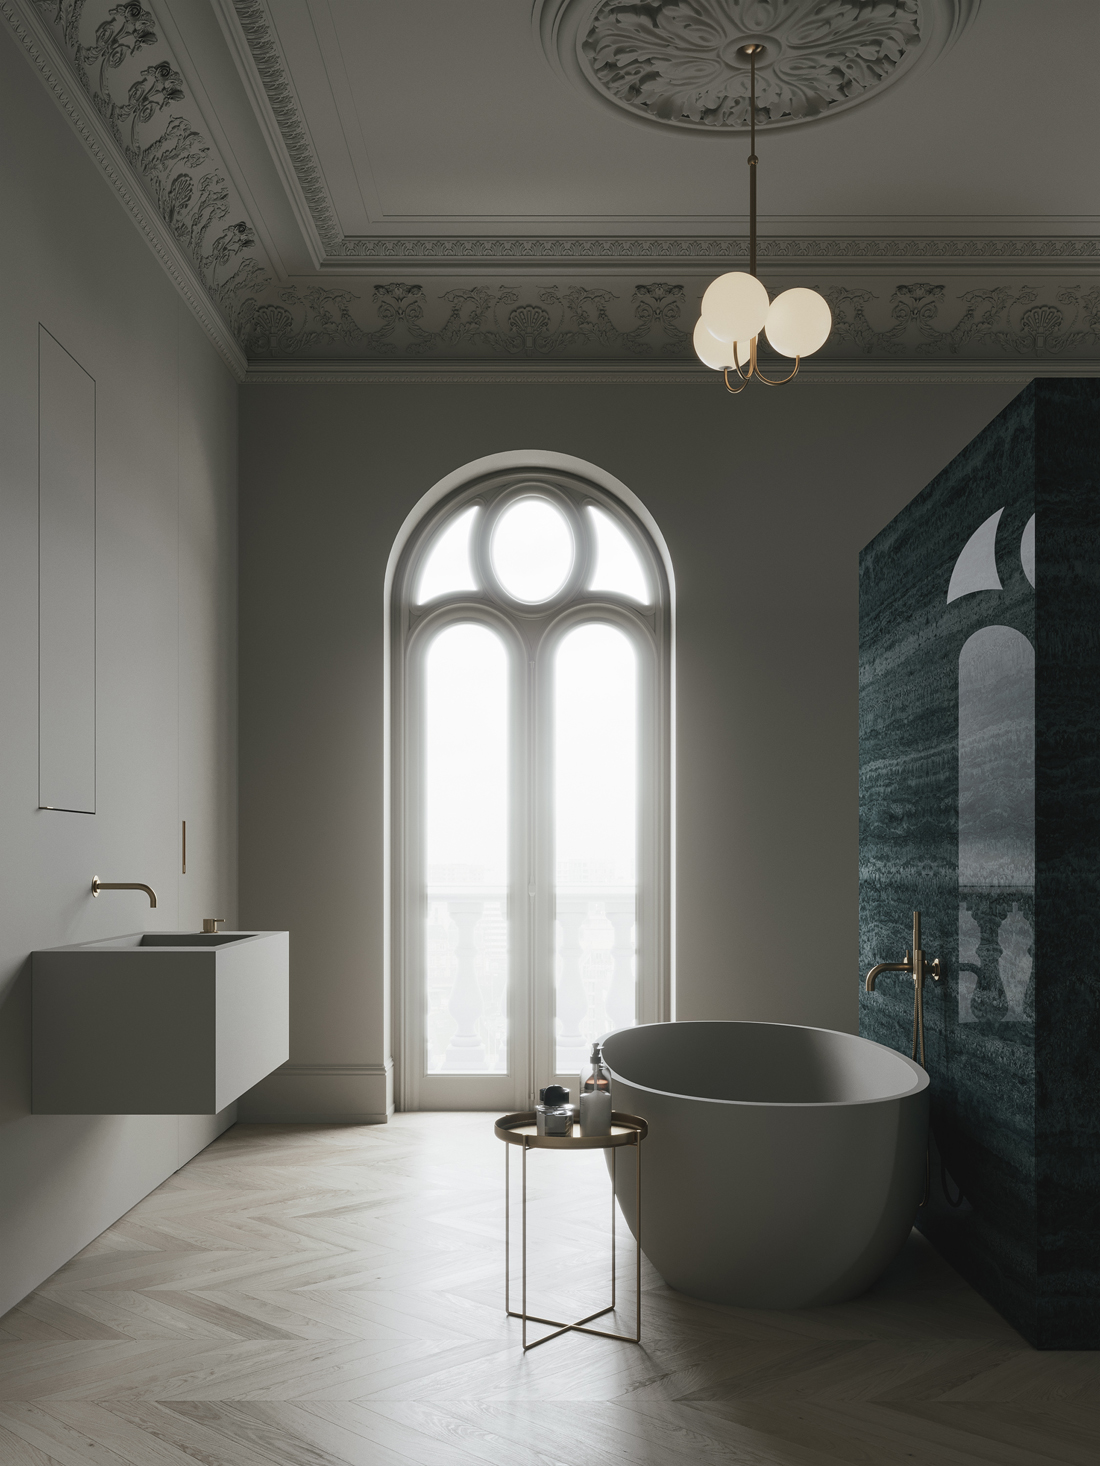 Beige & green stone bathroom design by Emil Dervish and Evgeniy Bulatnikov